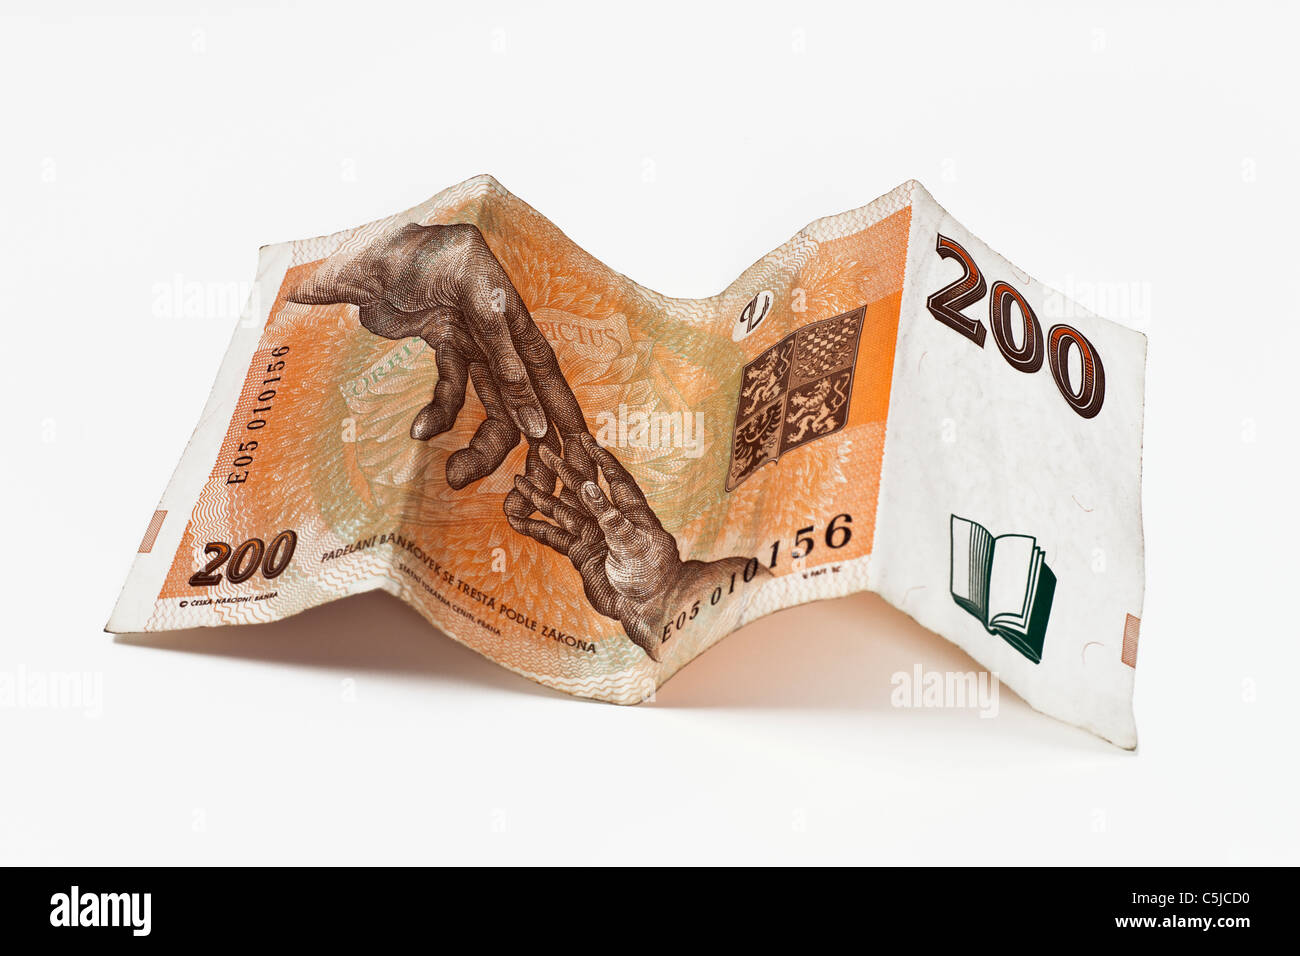 Rückseite einer tschechischen 200 Kronen | Billets verso d'un billet de 200 couronnes tchèques Banque D'Images